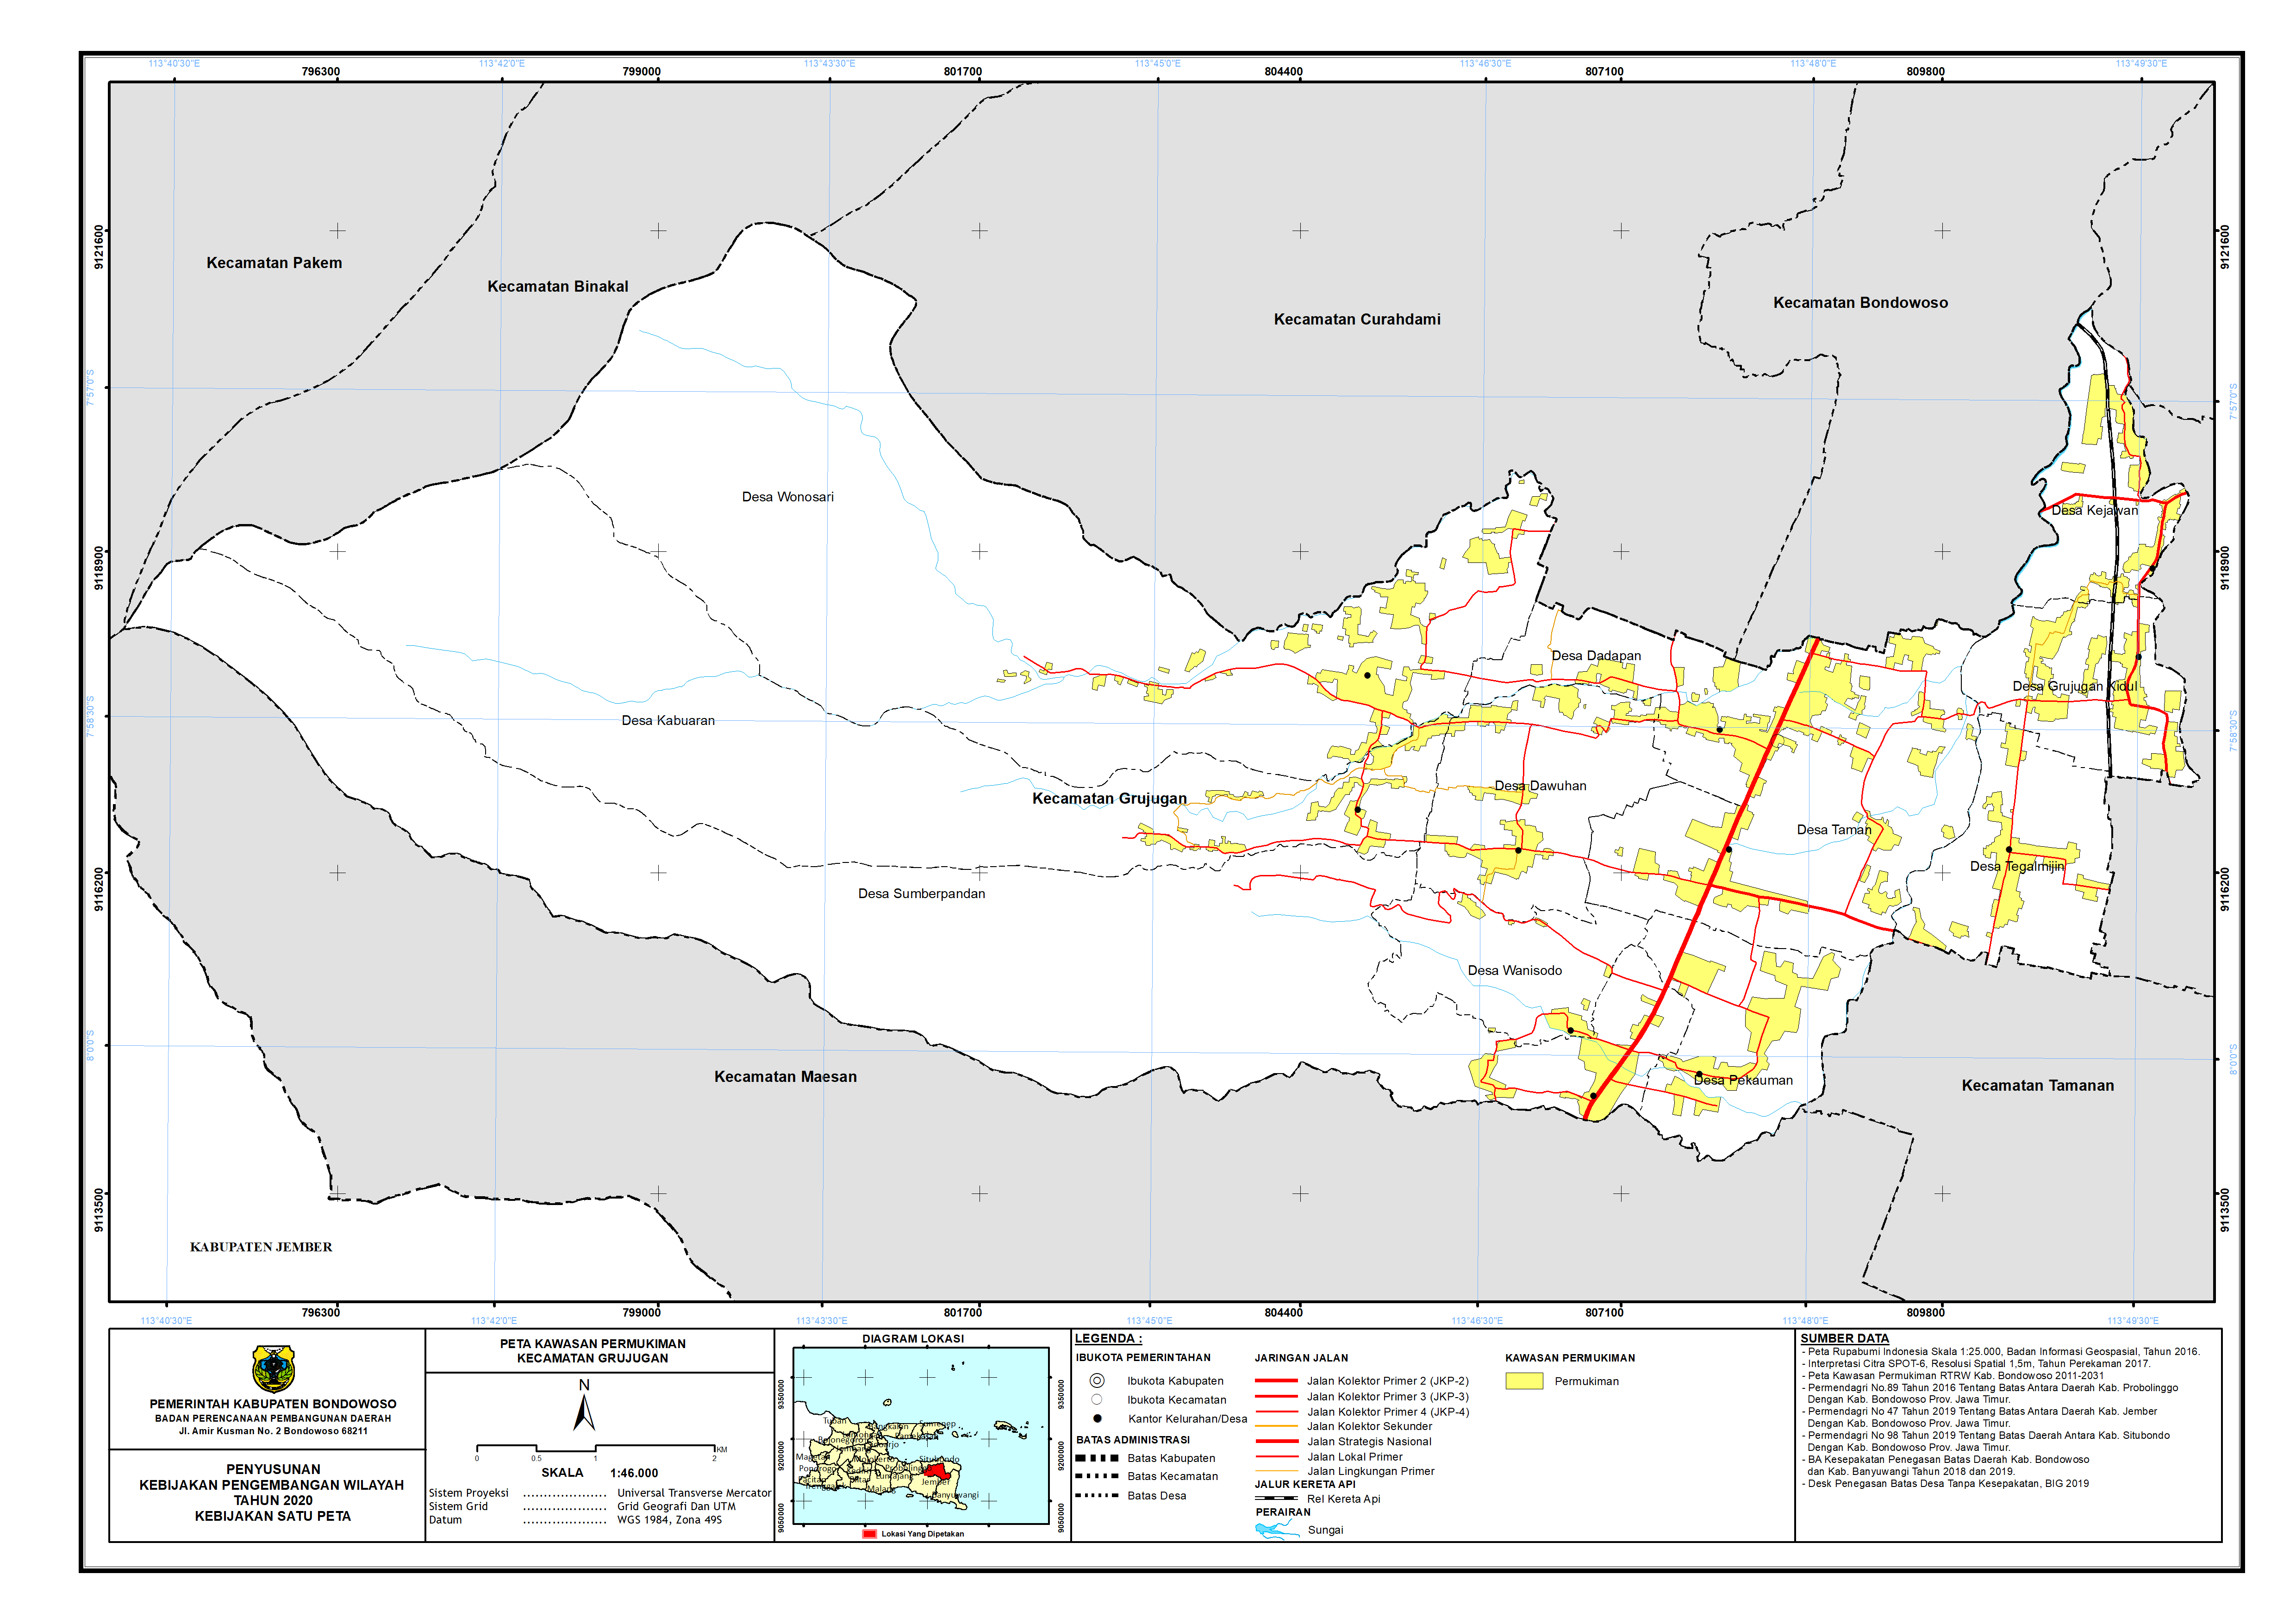 Peta Kawasan Permukiman Kecamatan Grujugan.png